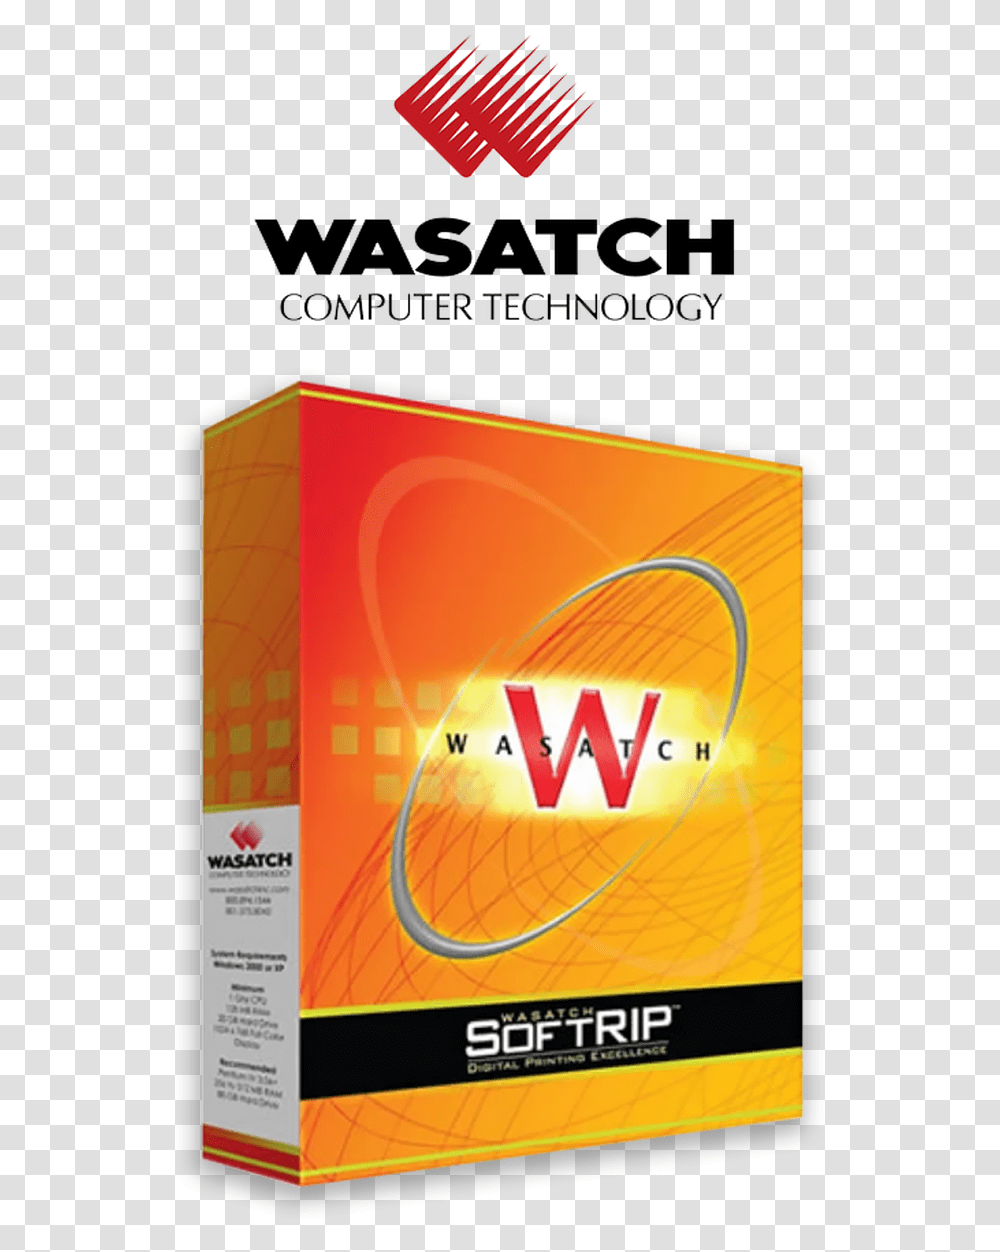 Wasatch Rip Software Wasatch Computer Technology Logo, Advertisement, Poster, Flyer Transparent Png